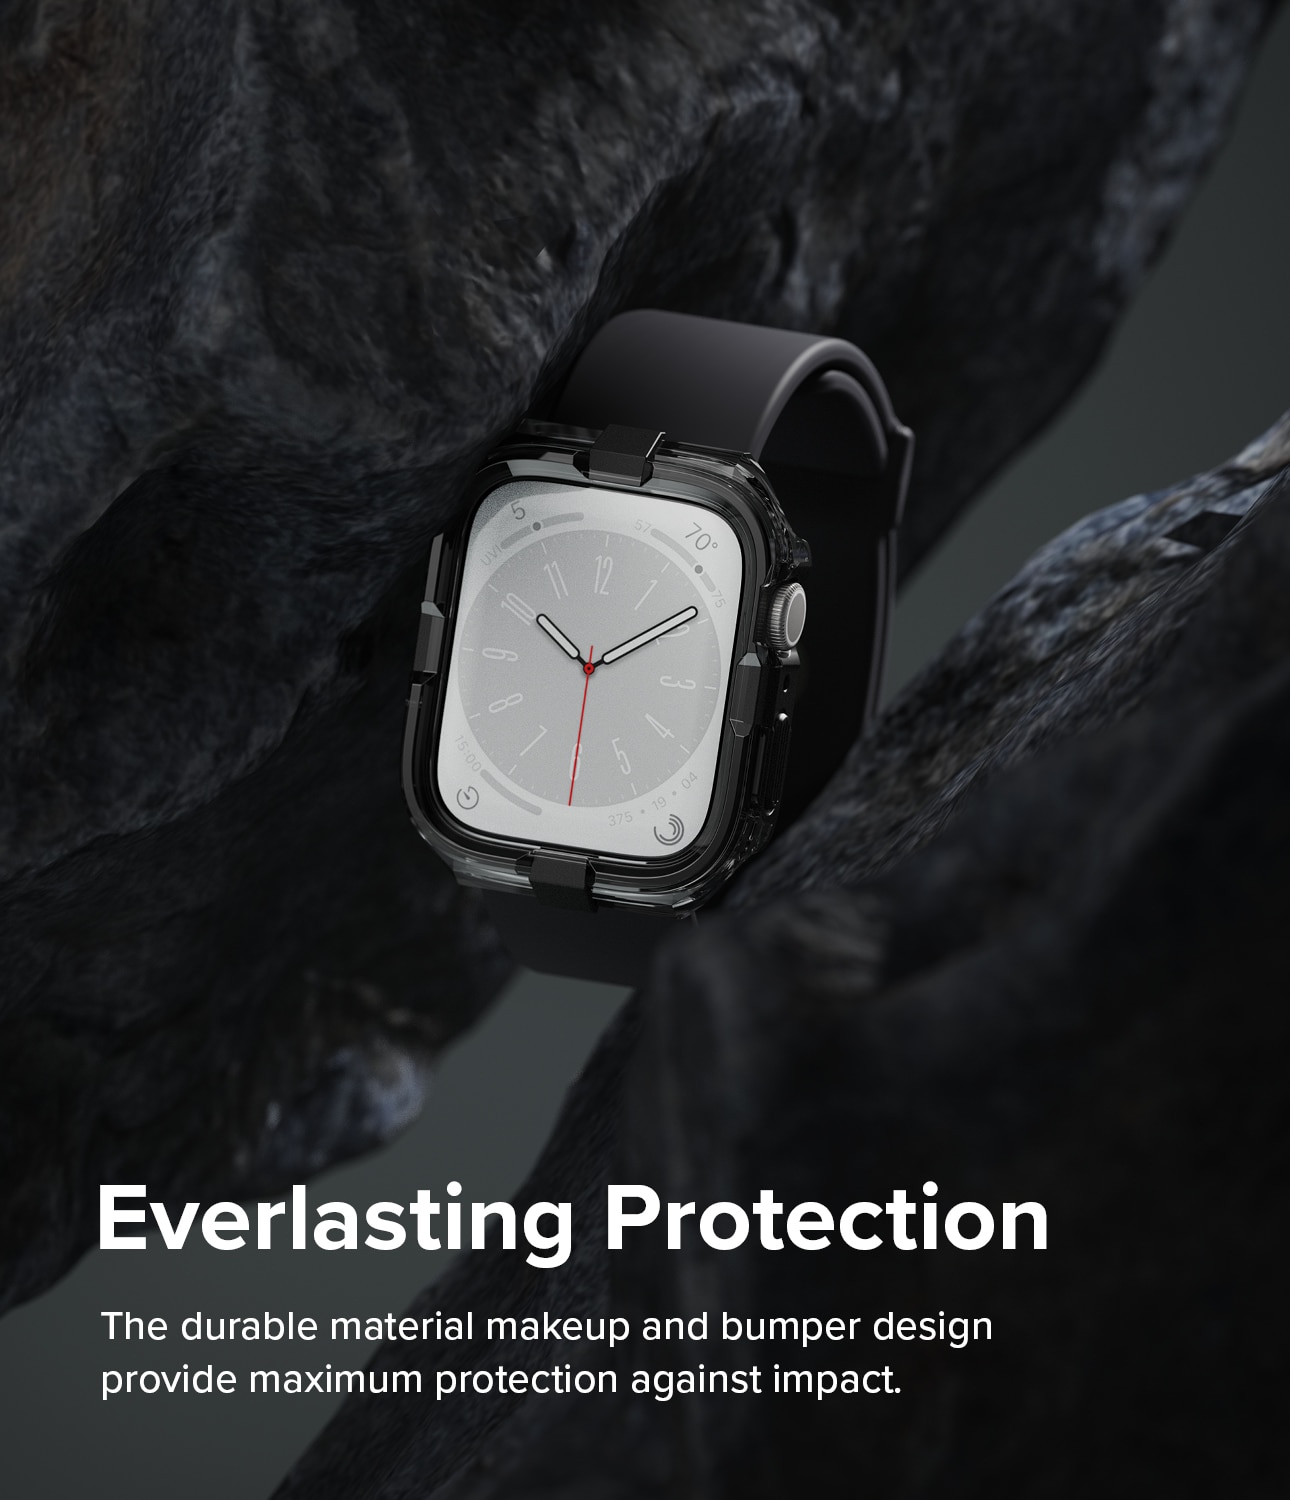 Fusion Bumper Apple Watch 44mm Black